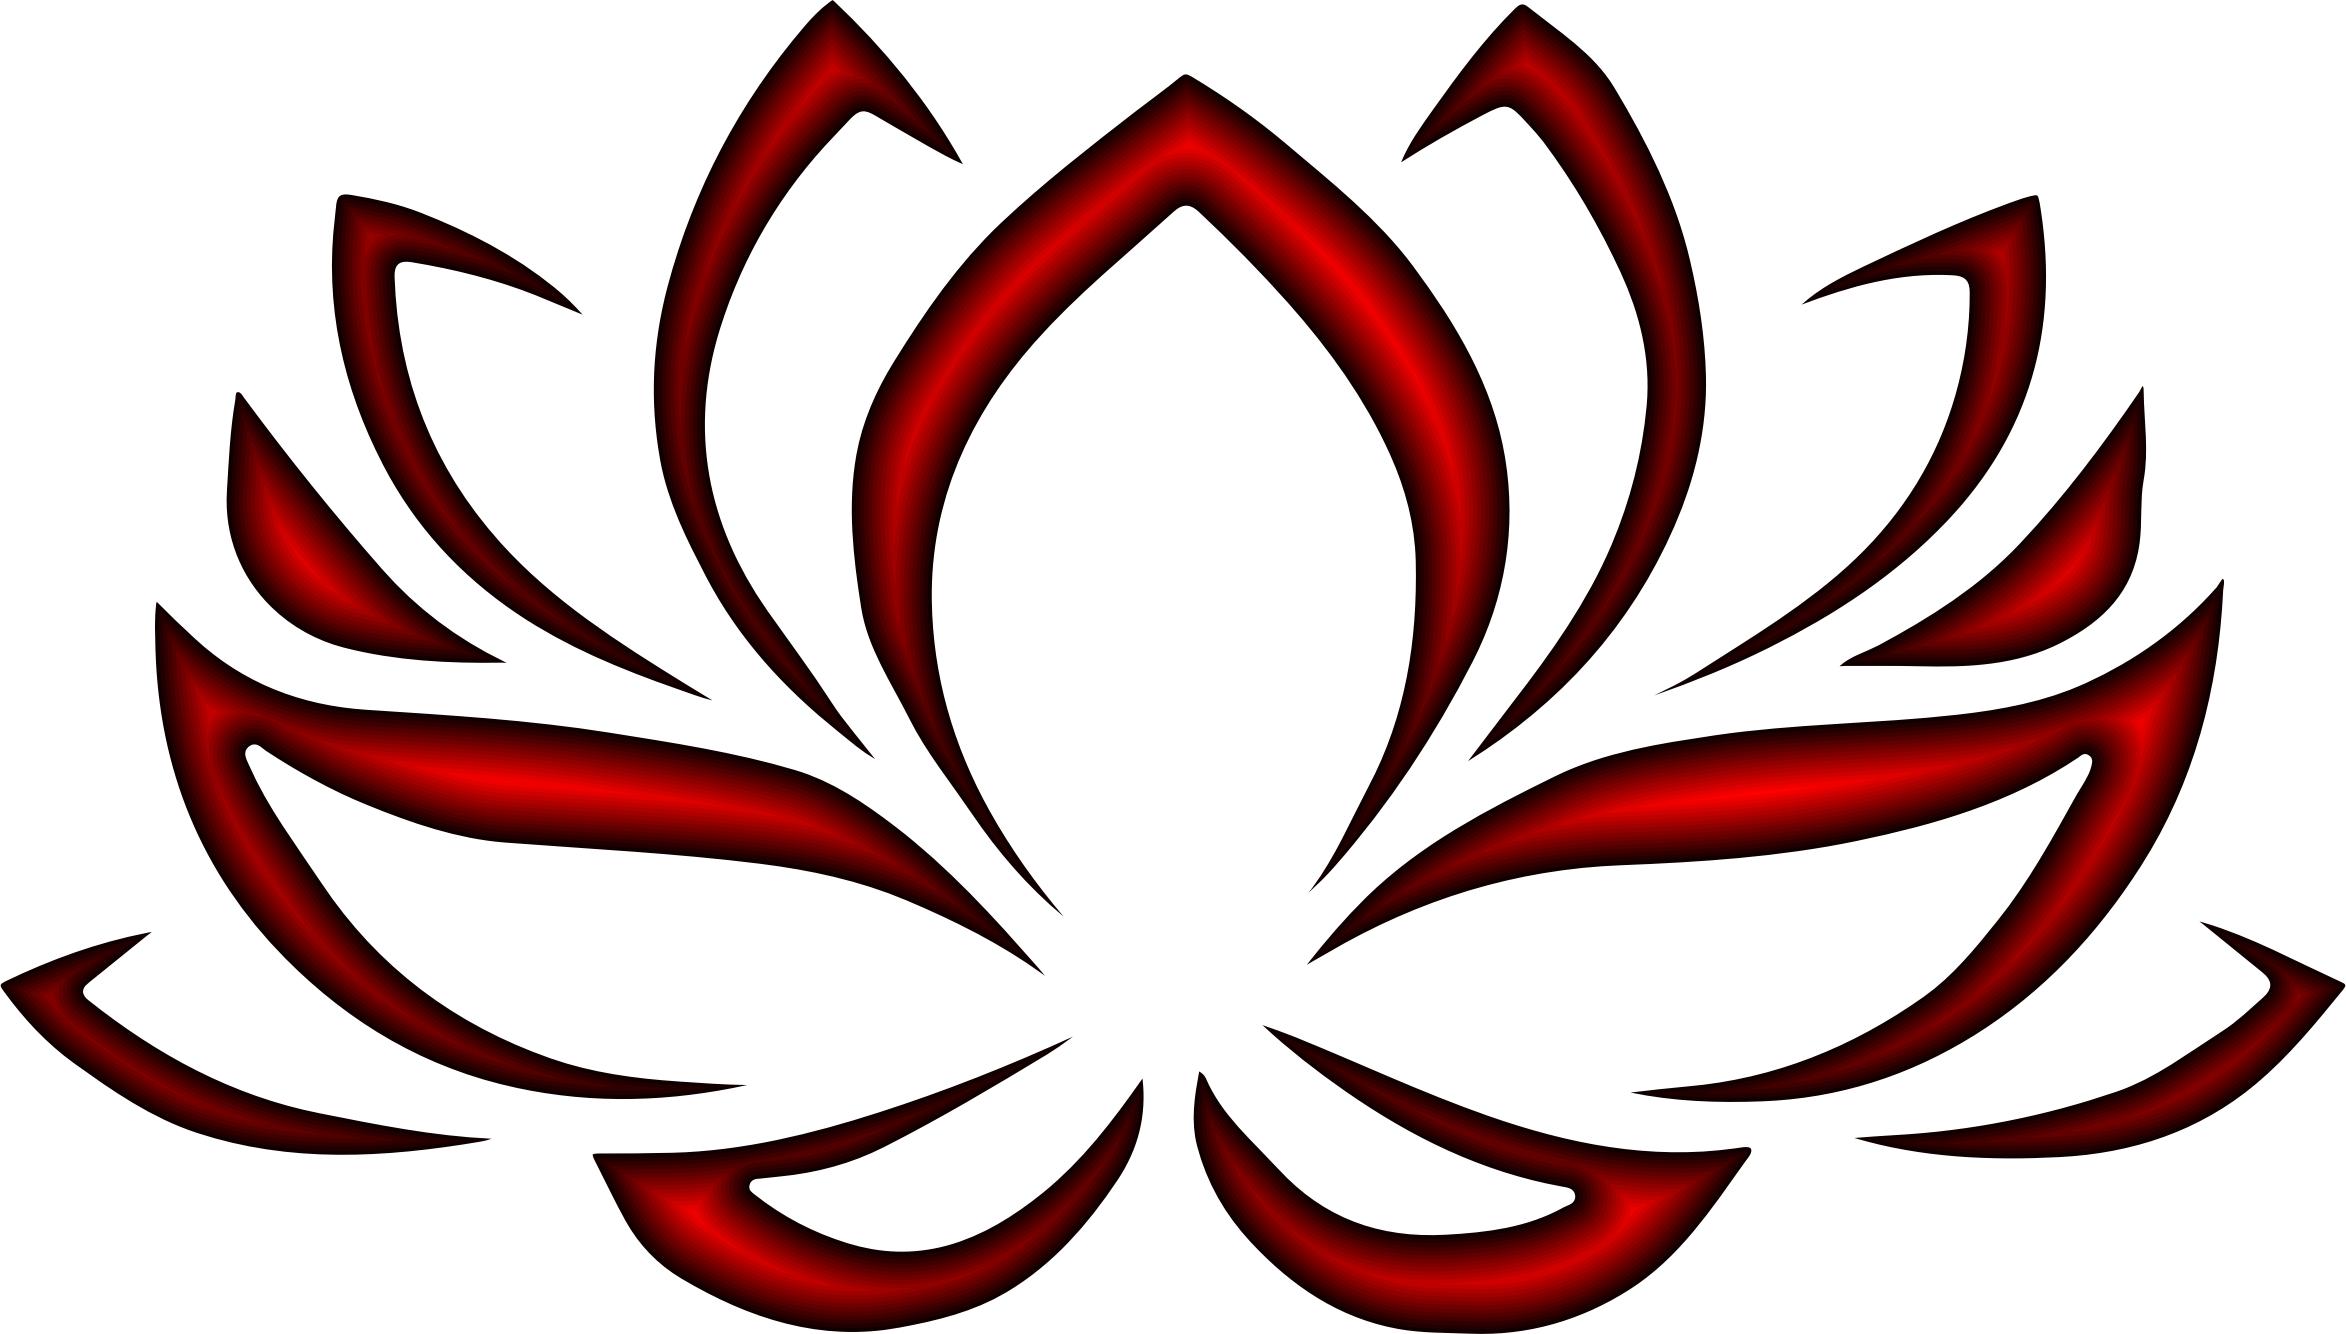 Crimson Lotus Flower png